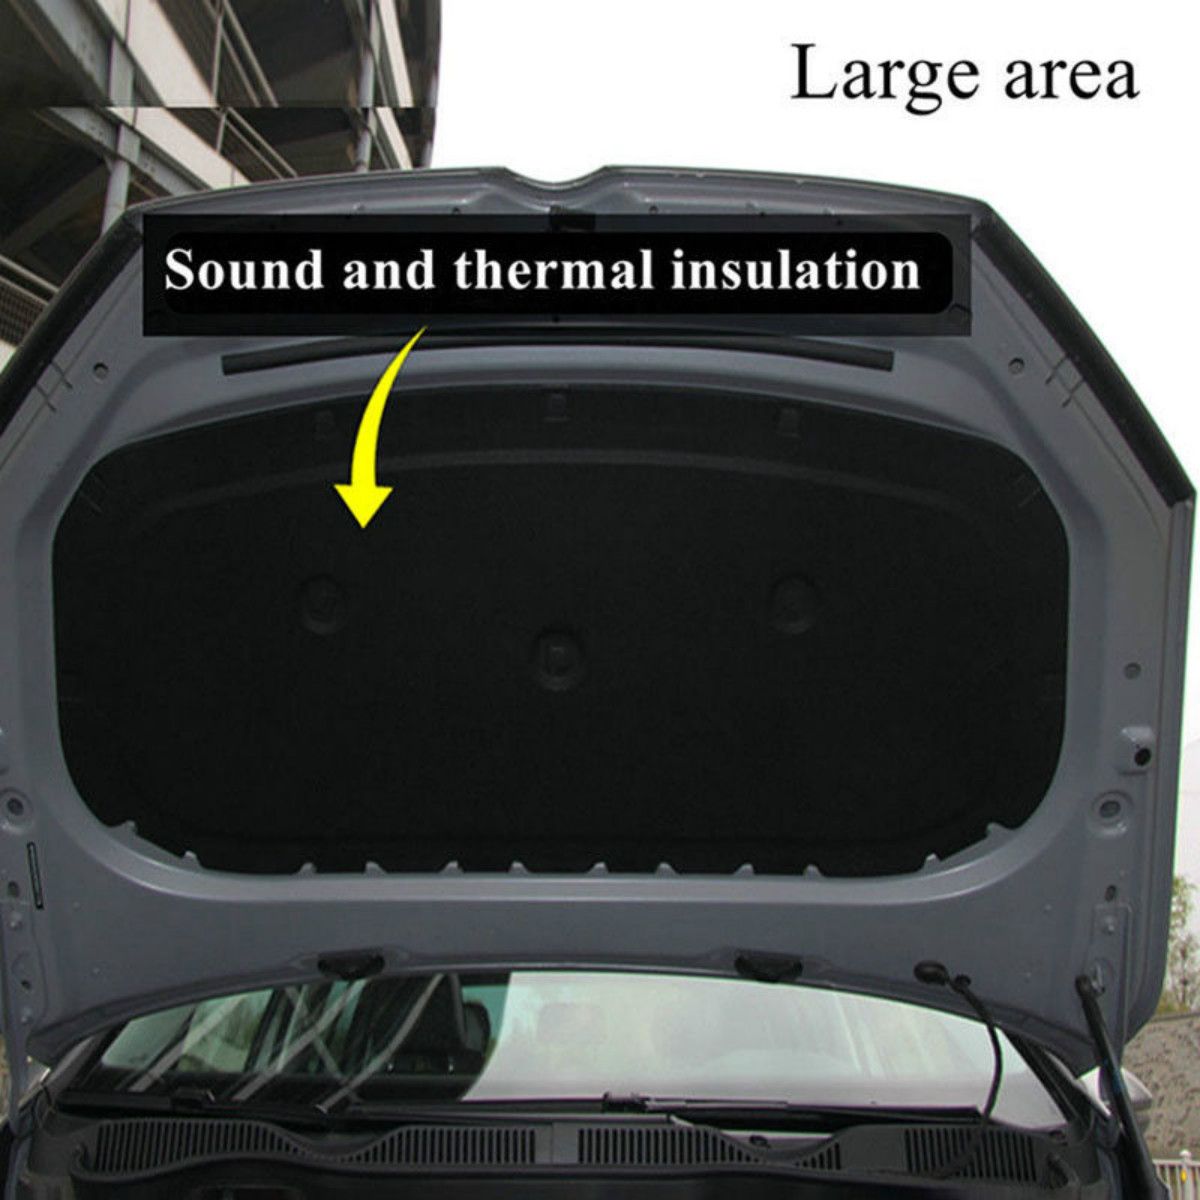 6mm-100x50cm-Closed-Cell-Foam-Car-Auto-Sound-Insulation-Cotton-Noise-Proofing-1315265